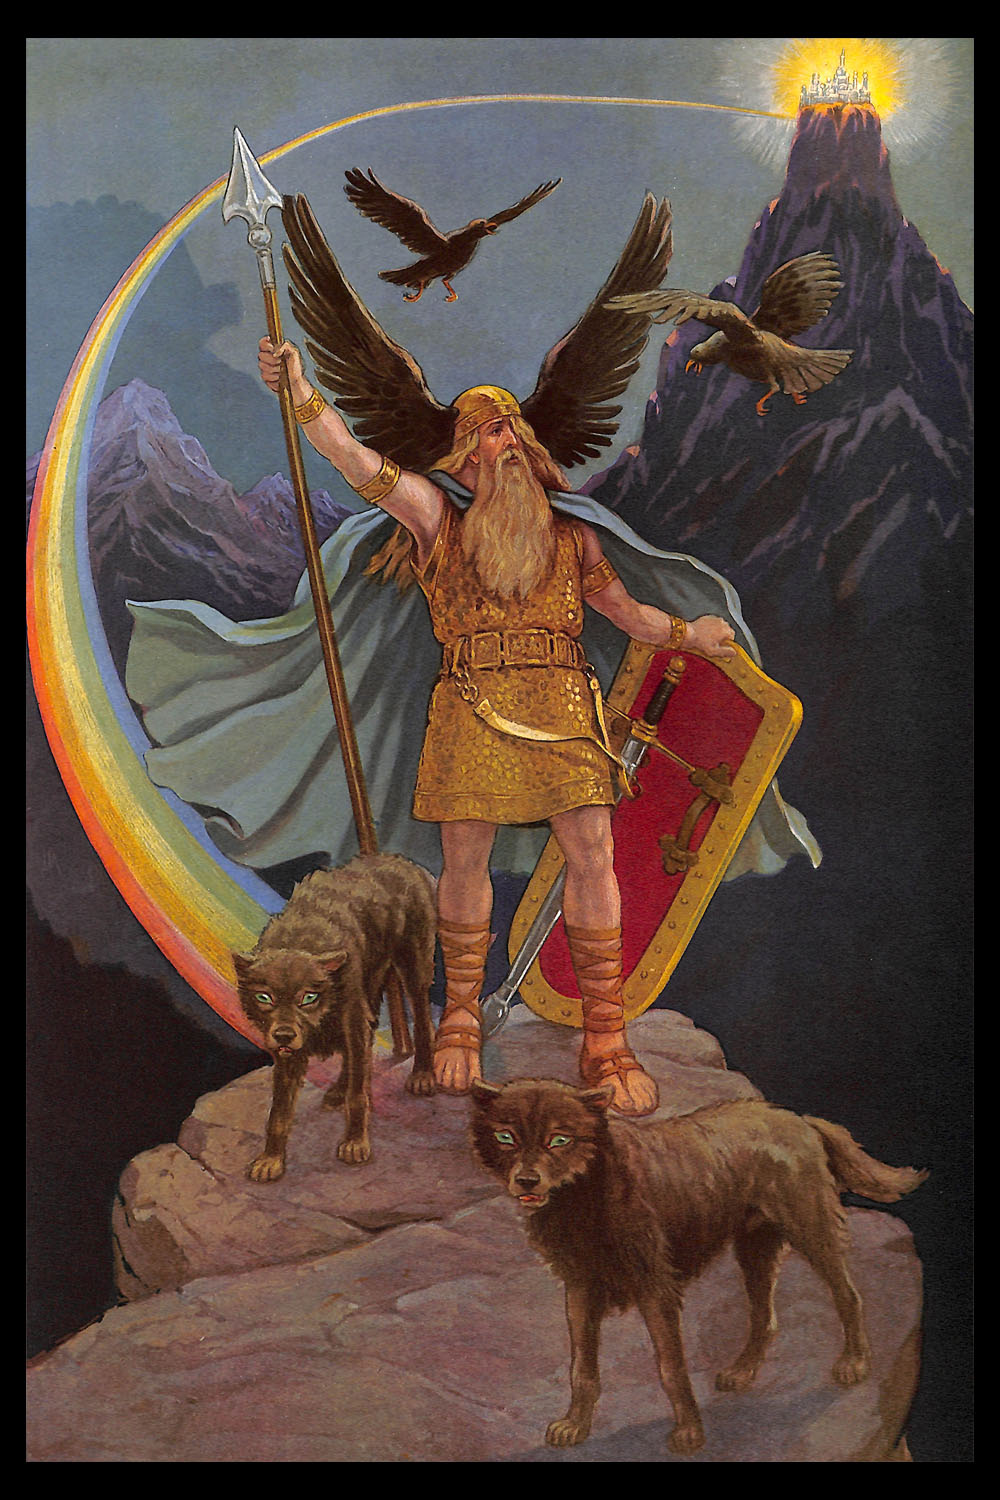 PLATE 5: Odin, Scandinavian All-Father